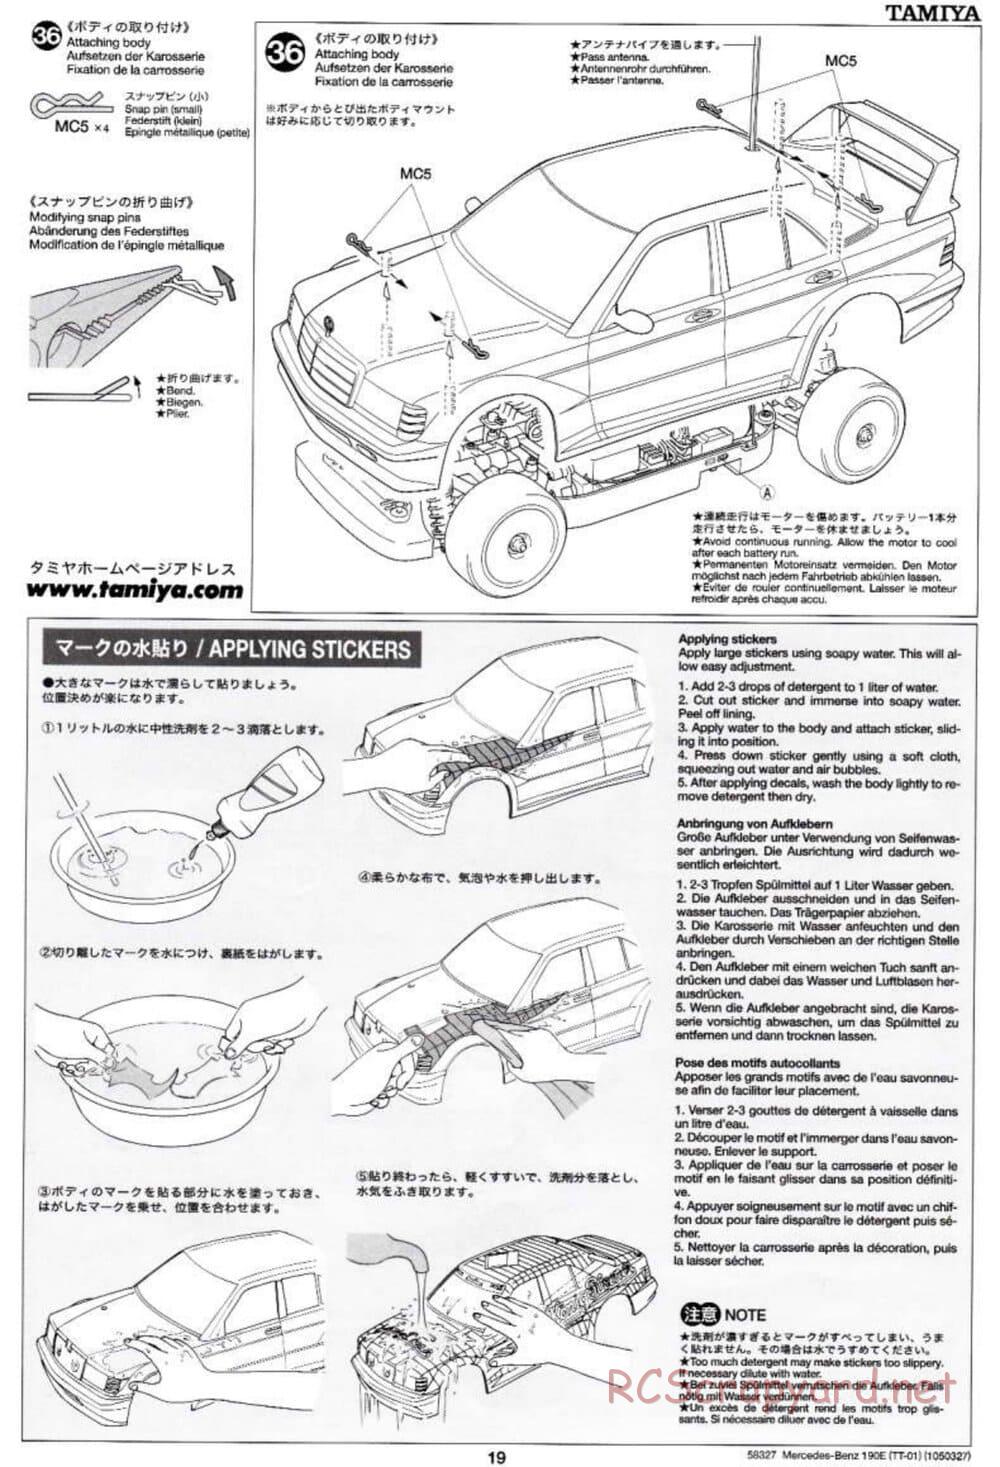 Tamiya - Mercedes Benz 190E Evo.II AMG - TT-01 Chassis - Manual - Page 19